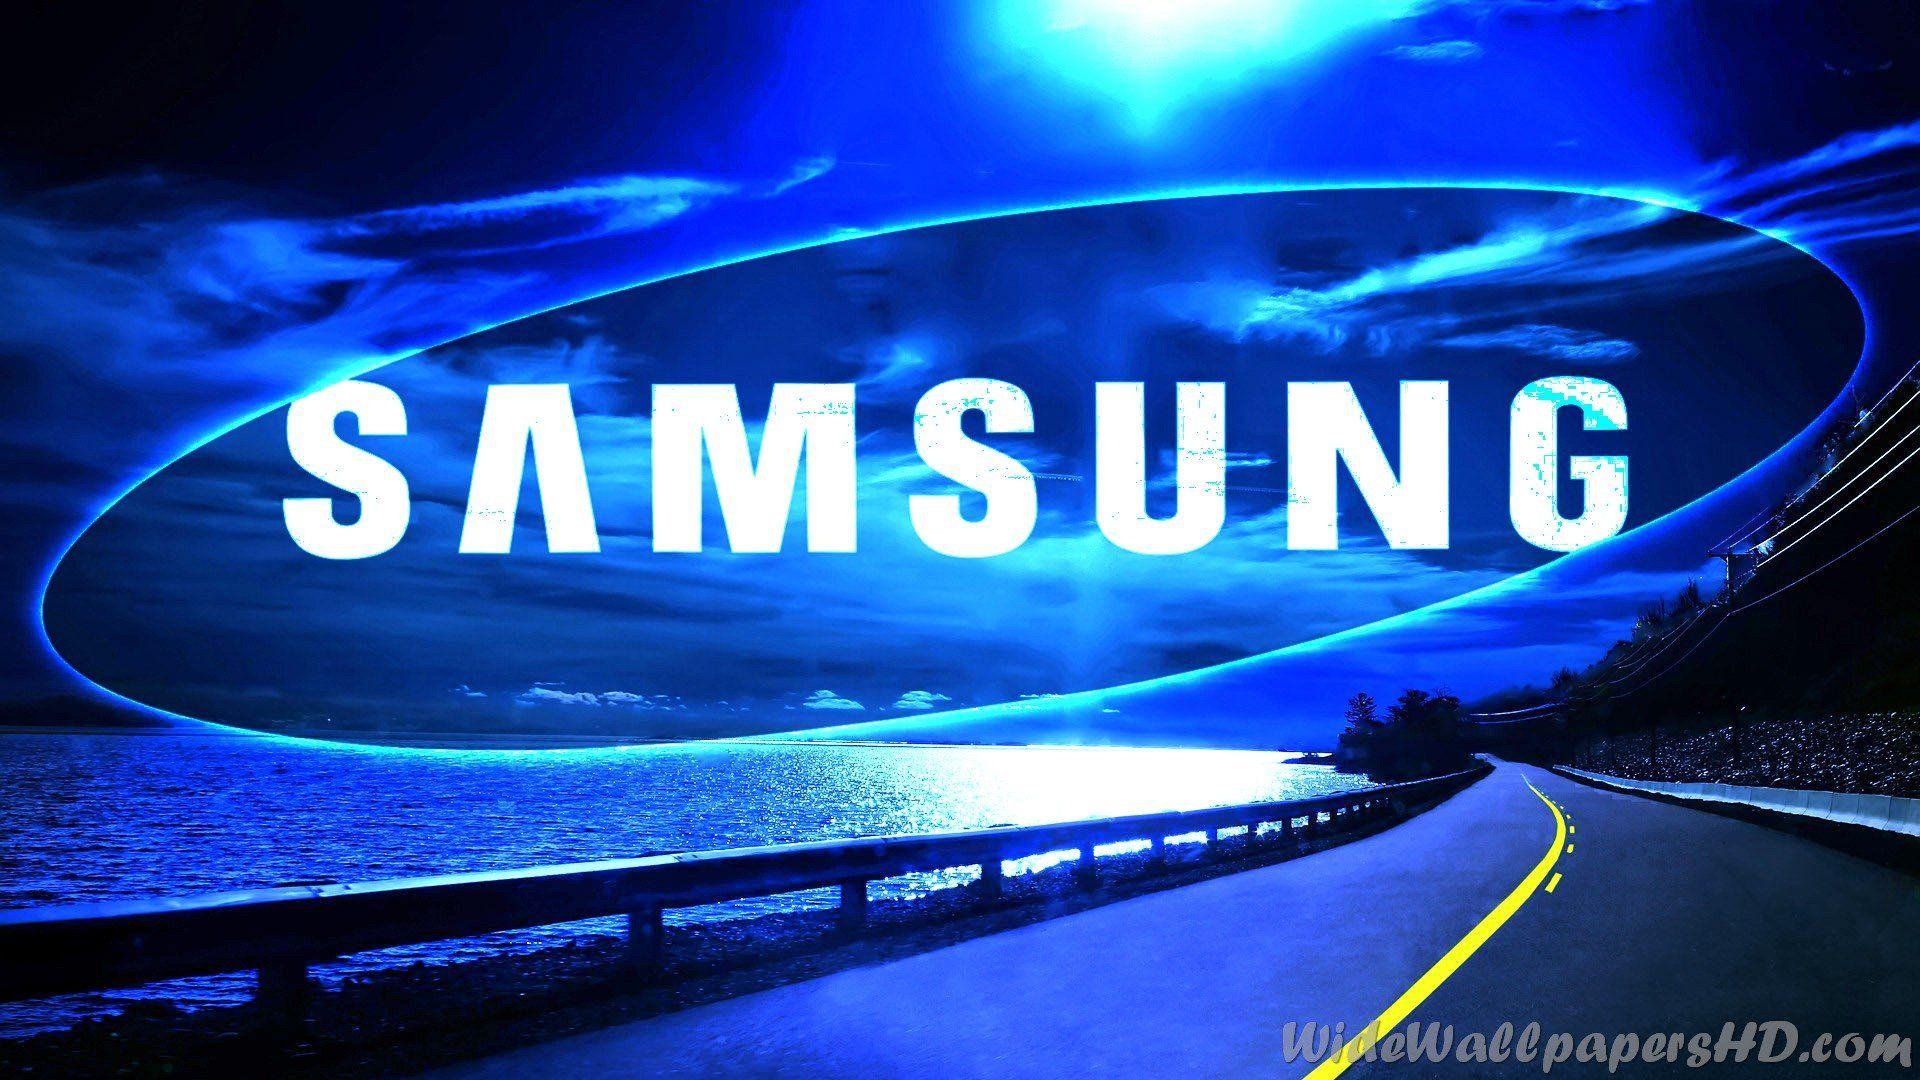 Samsung Logo Image. Beautiful image HD Picture & Desktop Wallpaper